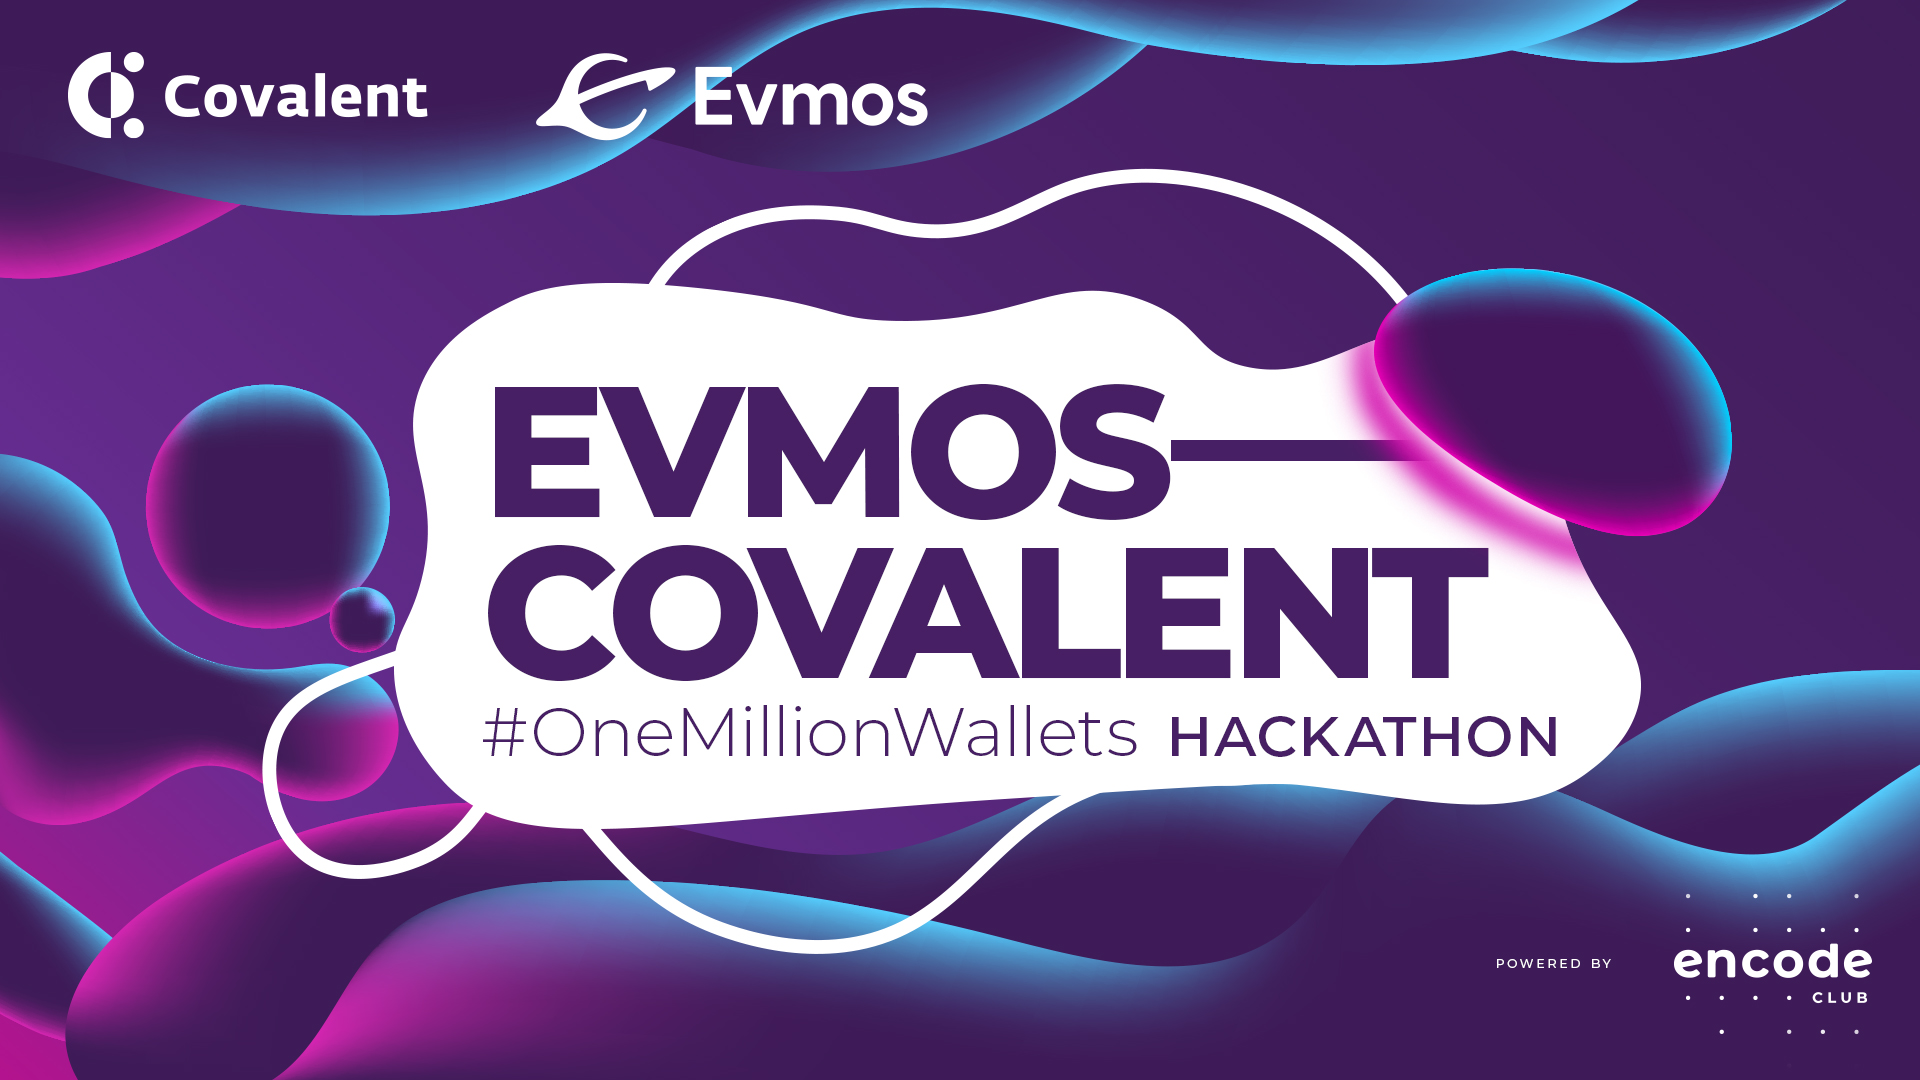 Announcing the Evmos-Covalent OneMillionWallets Hackathon!